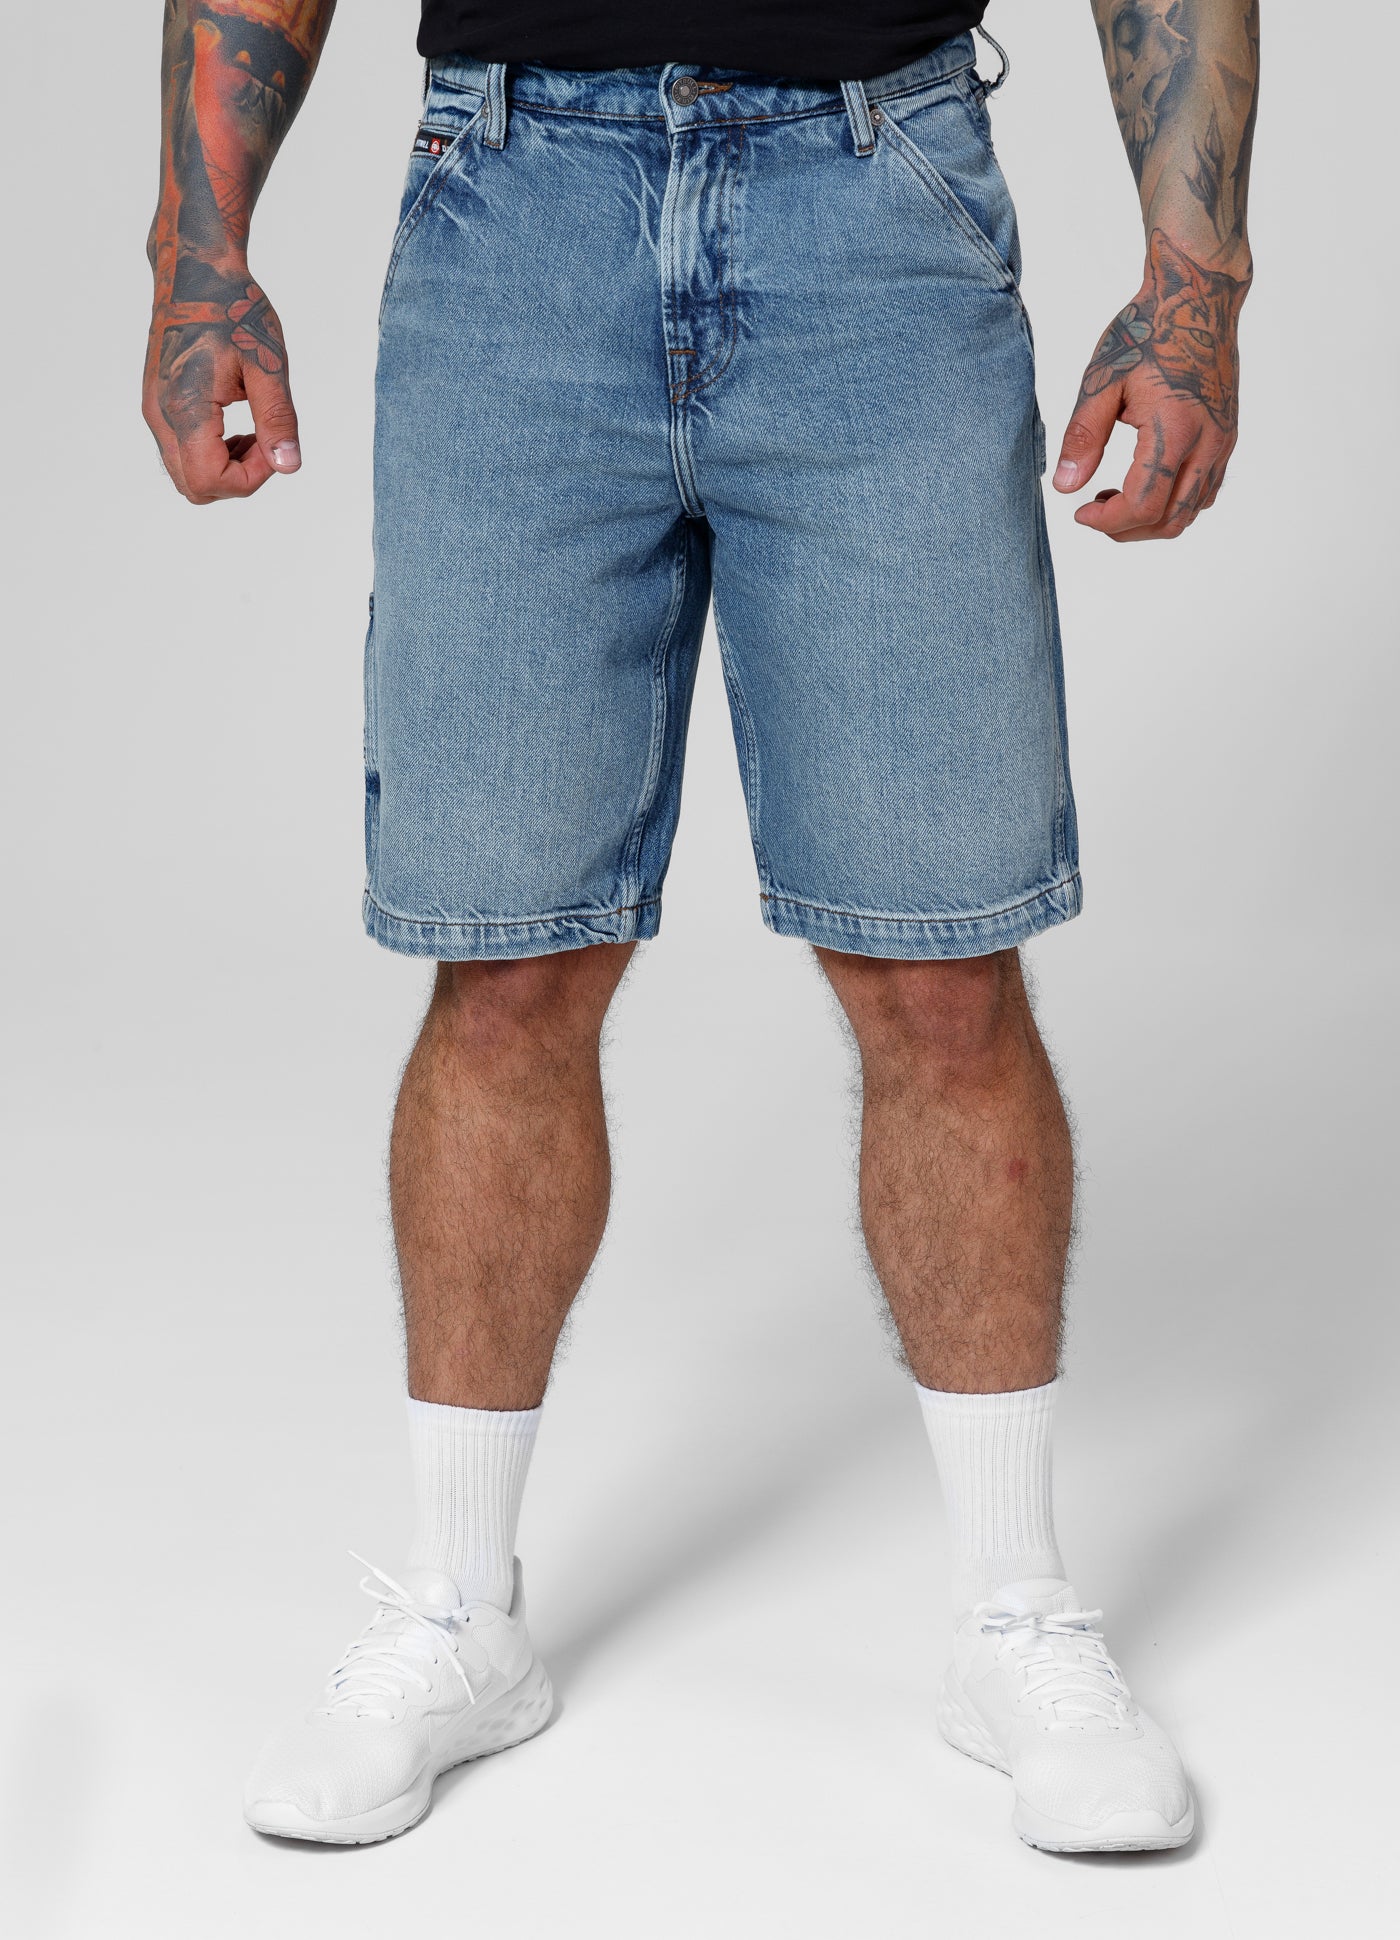 CARPENTER Blue Denim Jeans Shorts